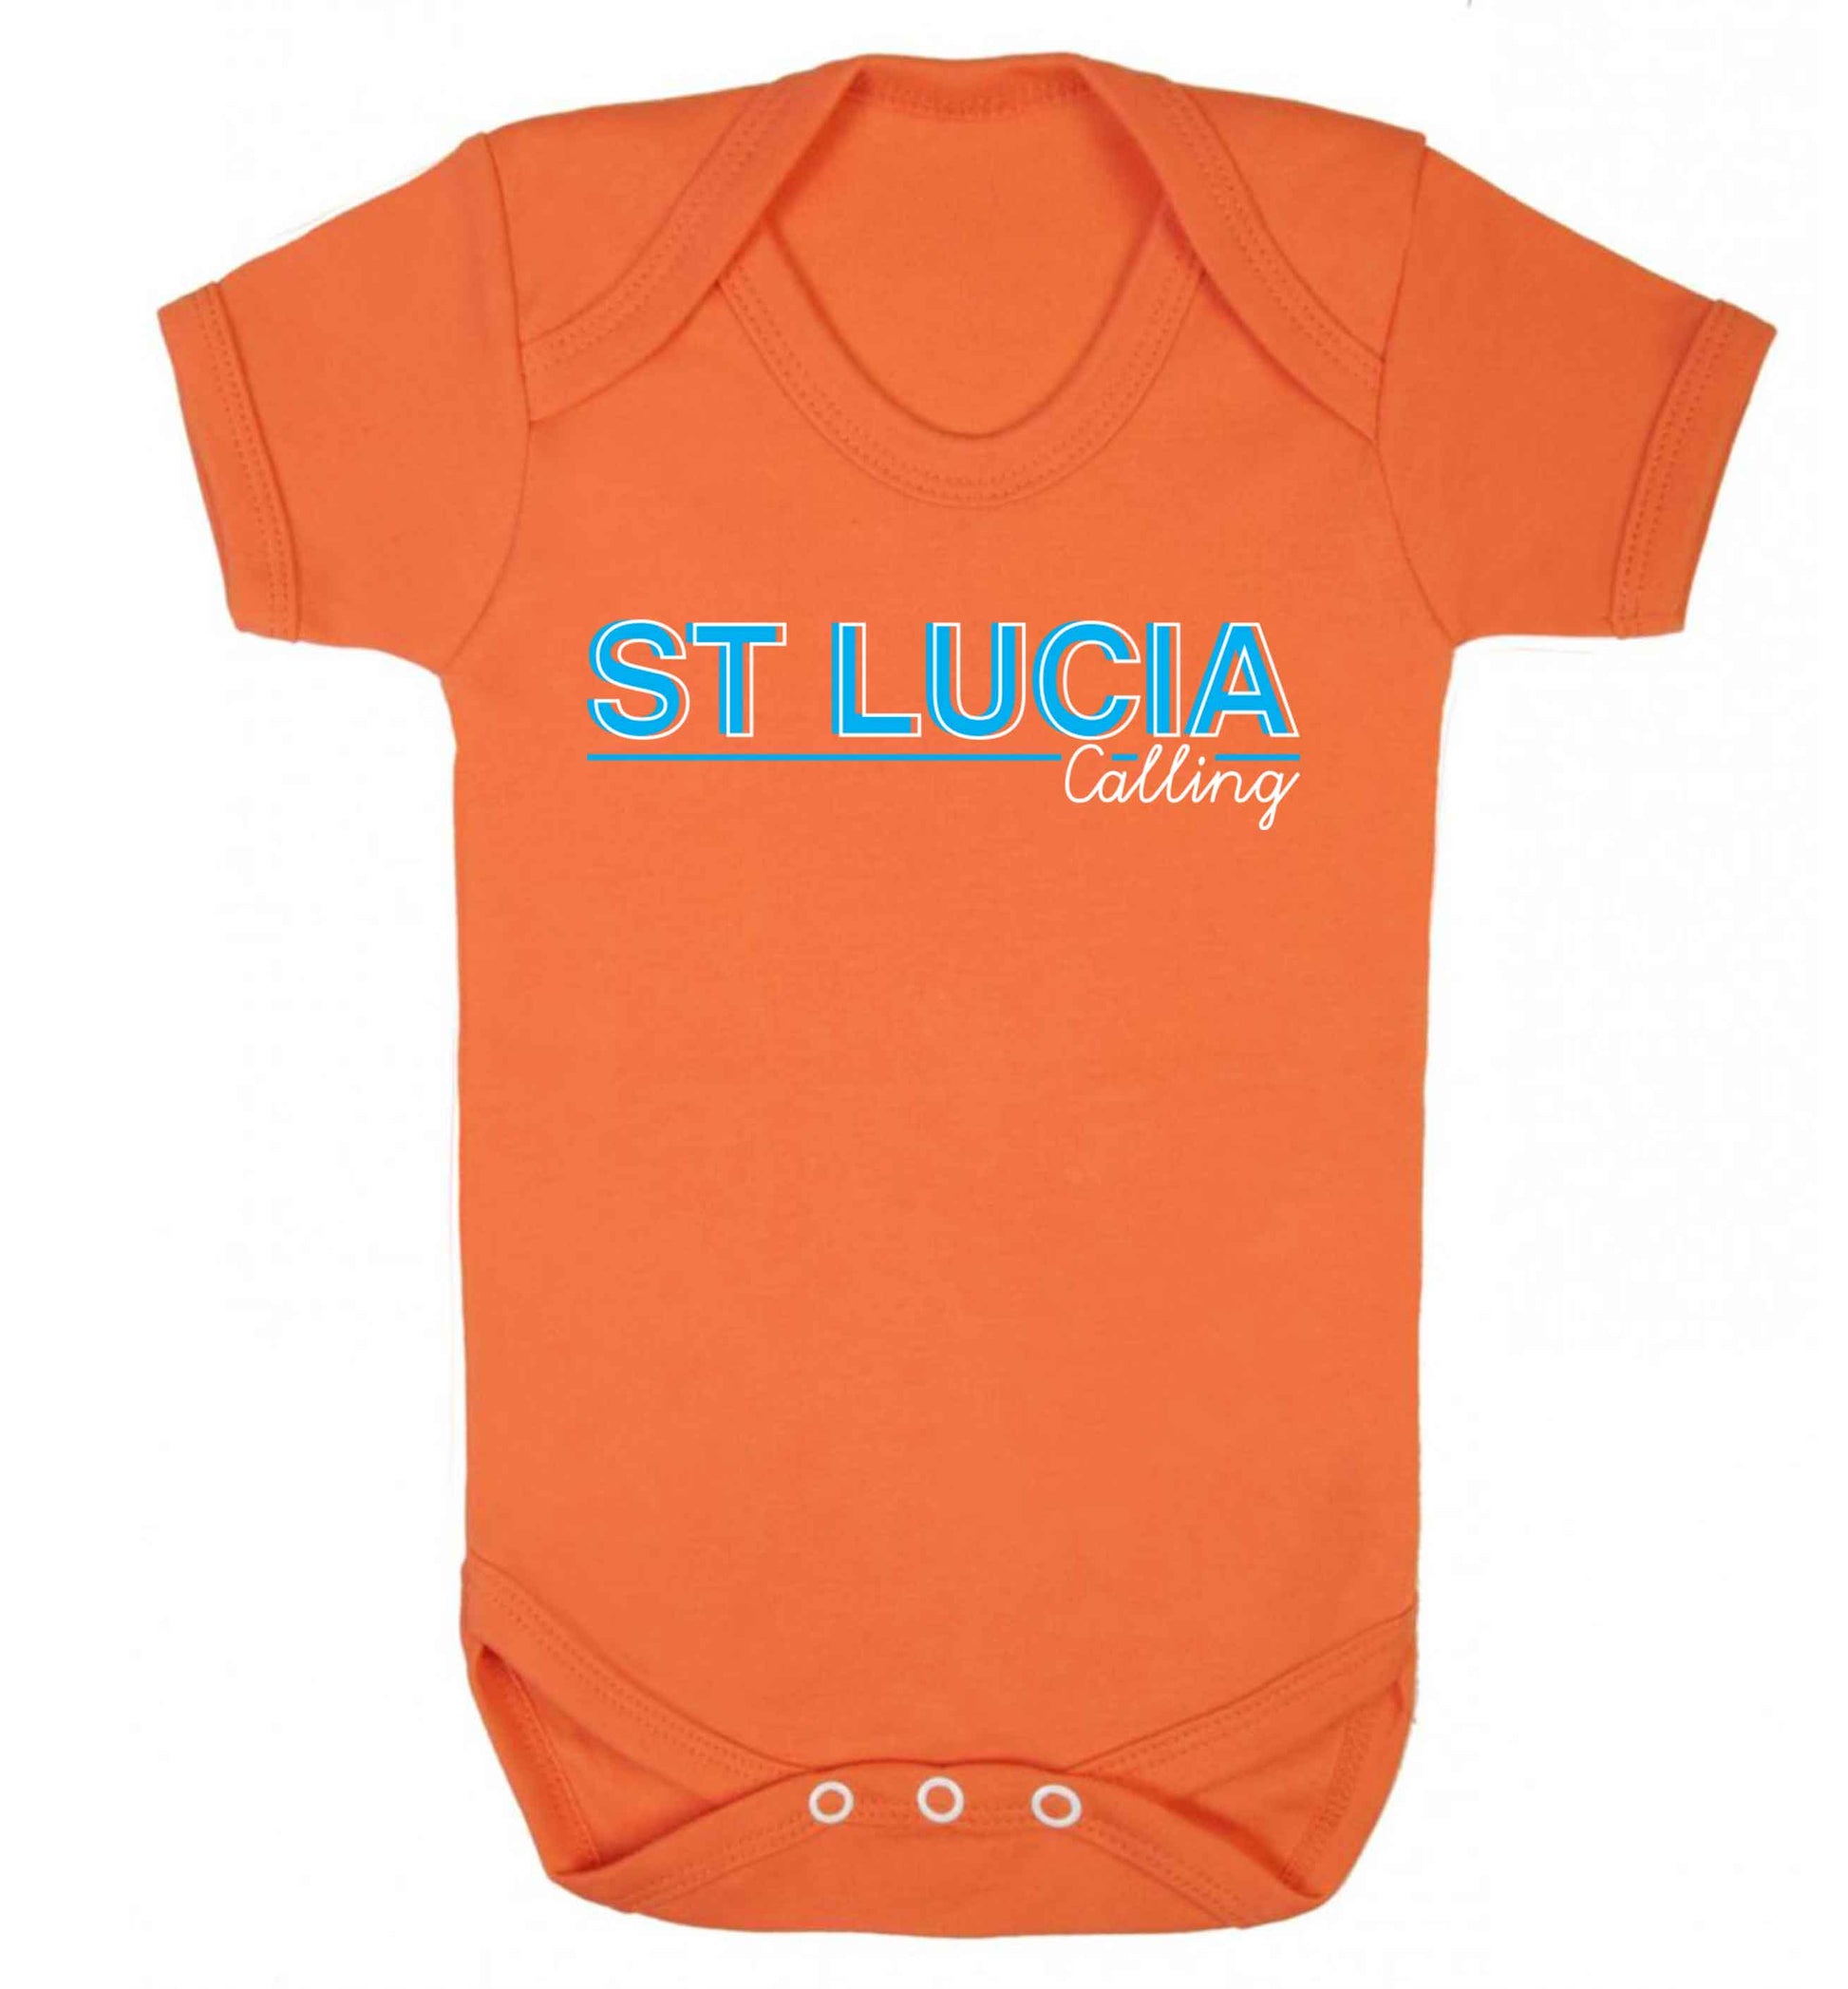 St Lucia calling Baby Vest orange 18-24 months